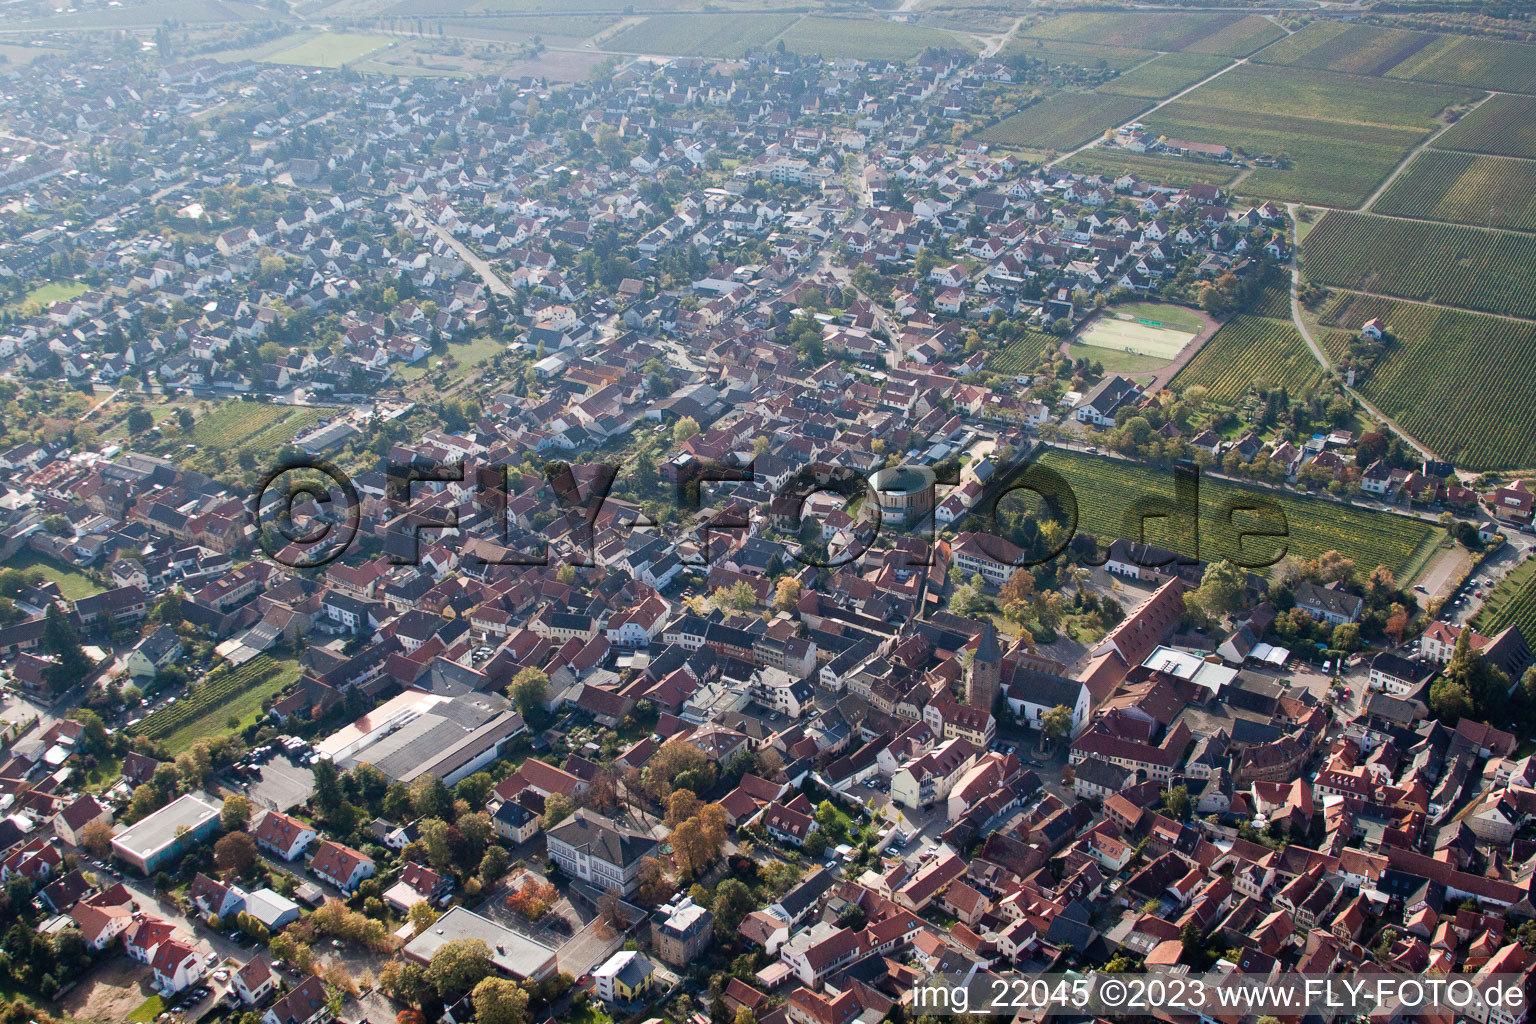 Aerial view of District Mußbach in Neustadt an der Weinstraße in the state Rhineland-Palatinate, Germany